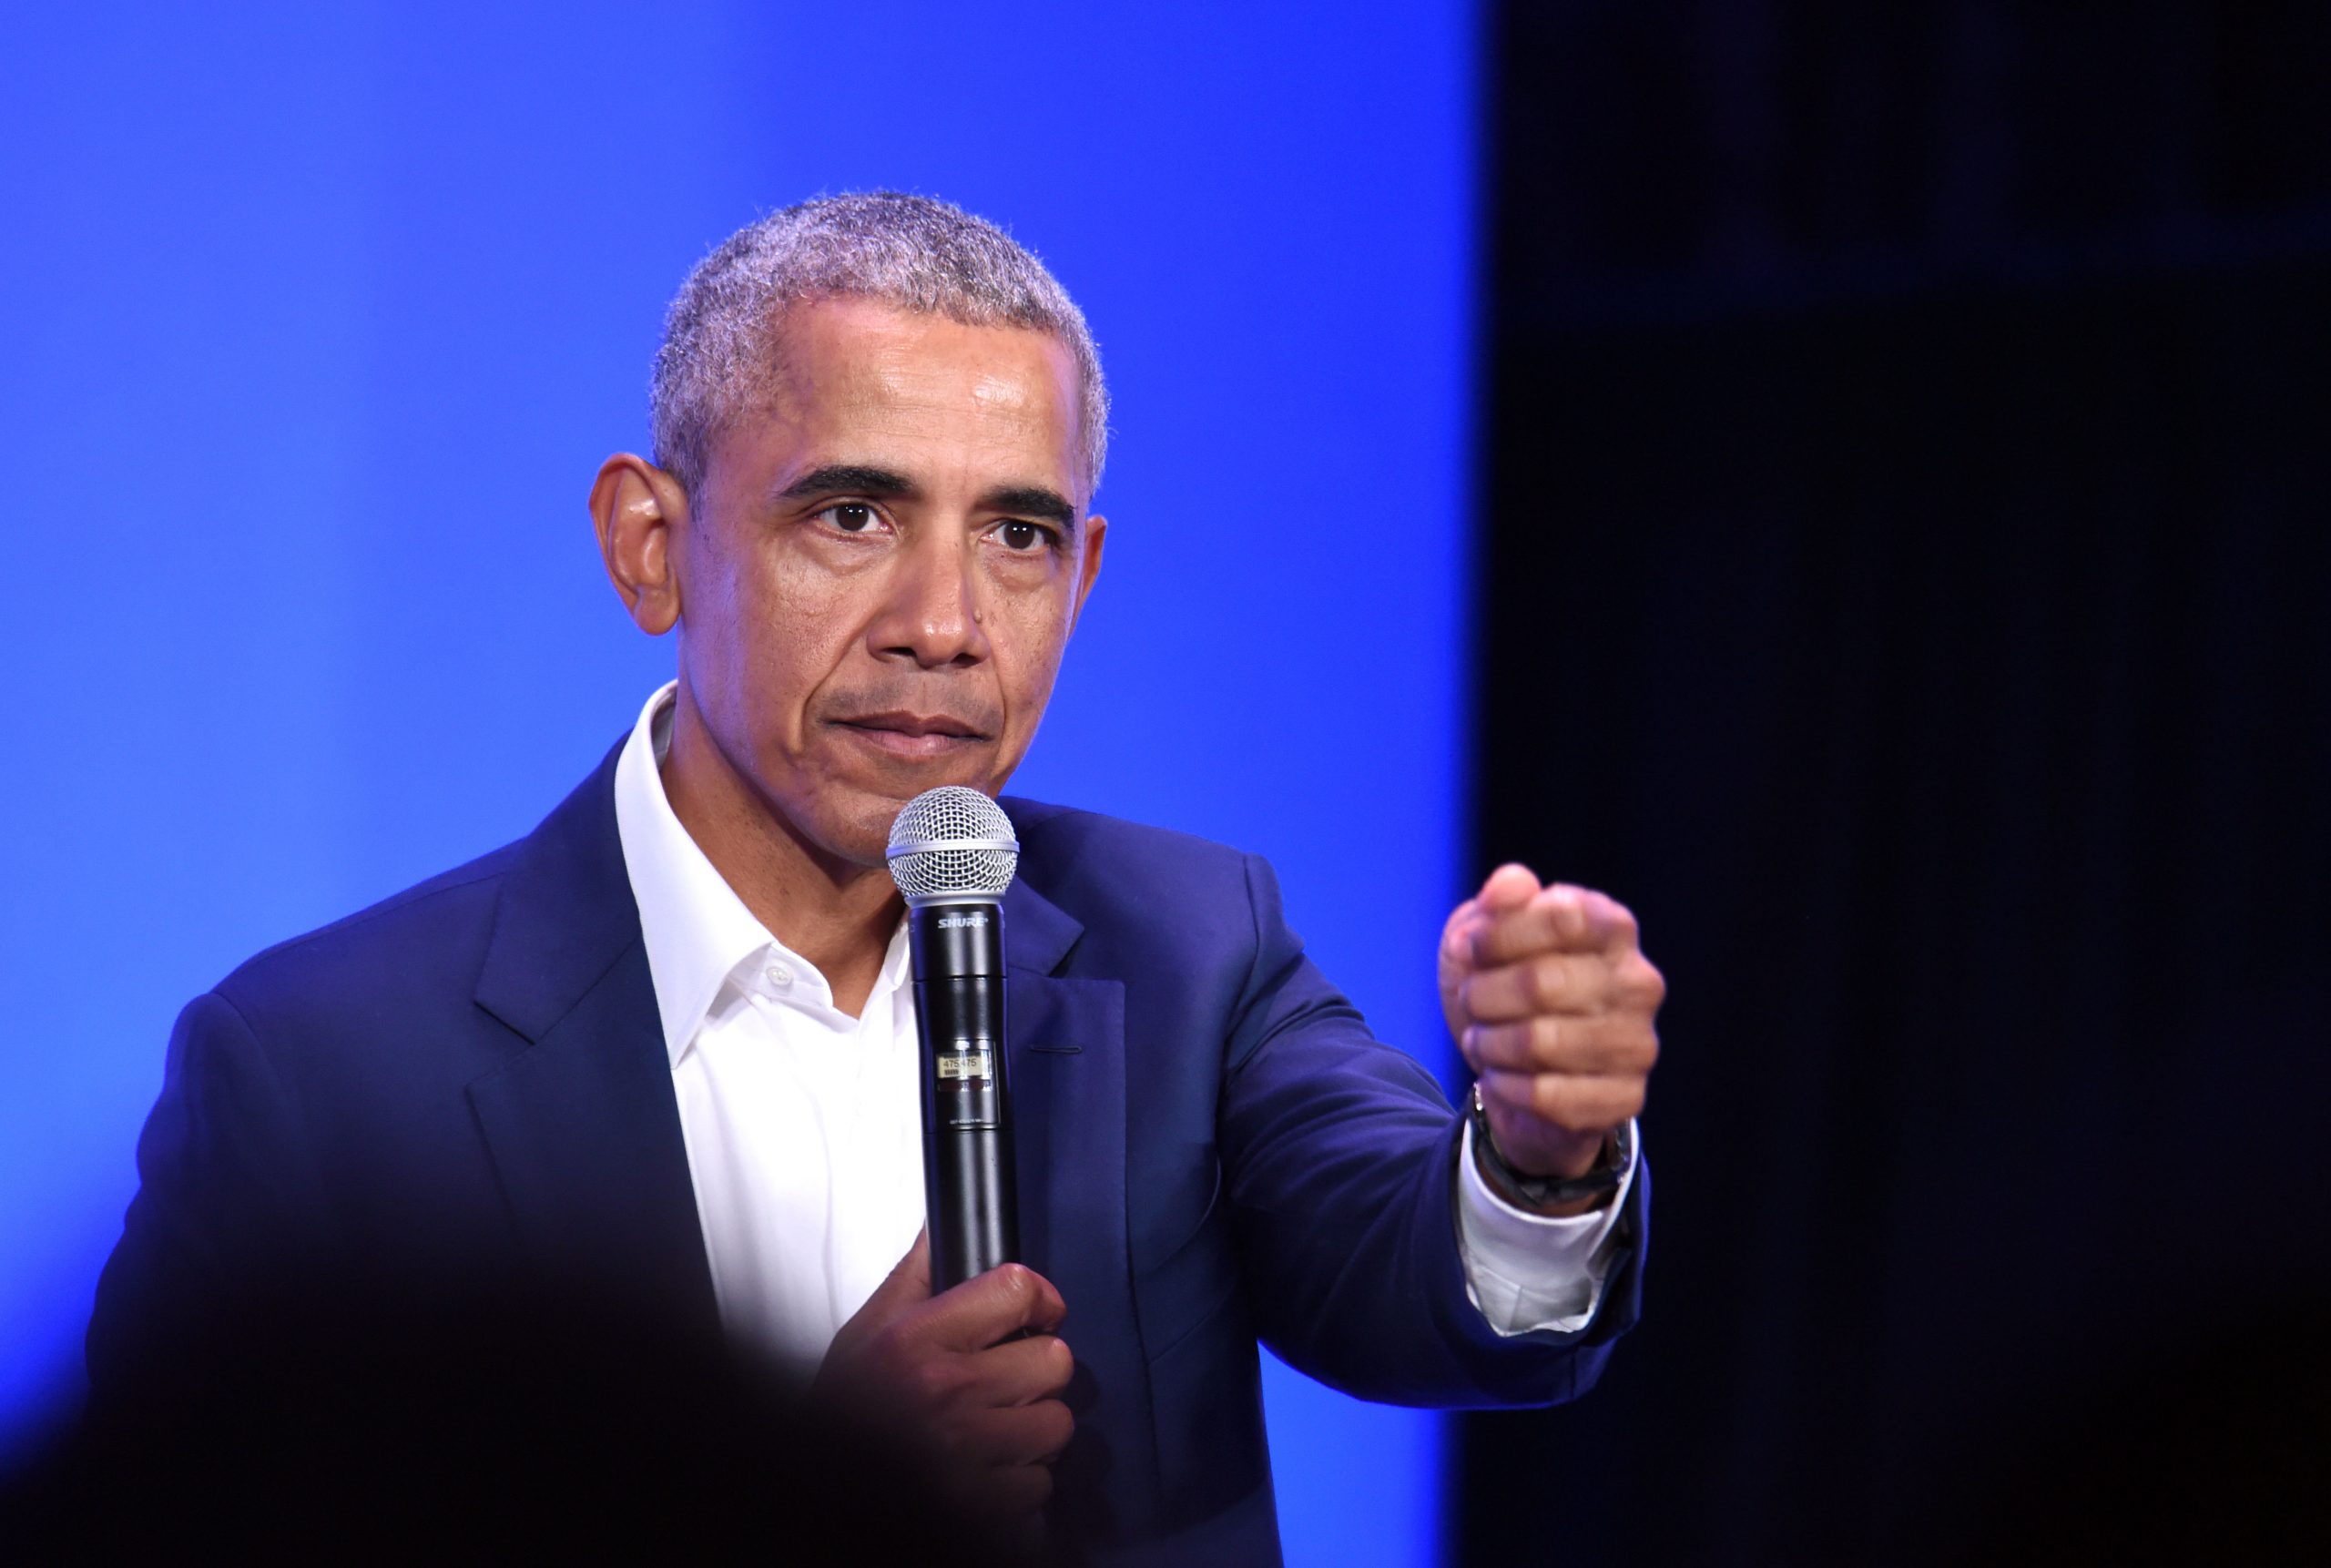 Barack Obama’s memoir ‘A Promised Land’ to be released in November